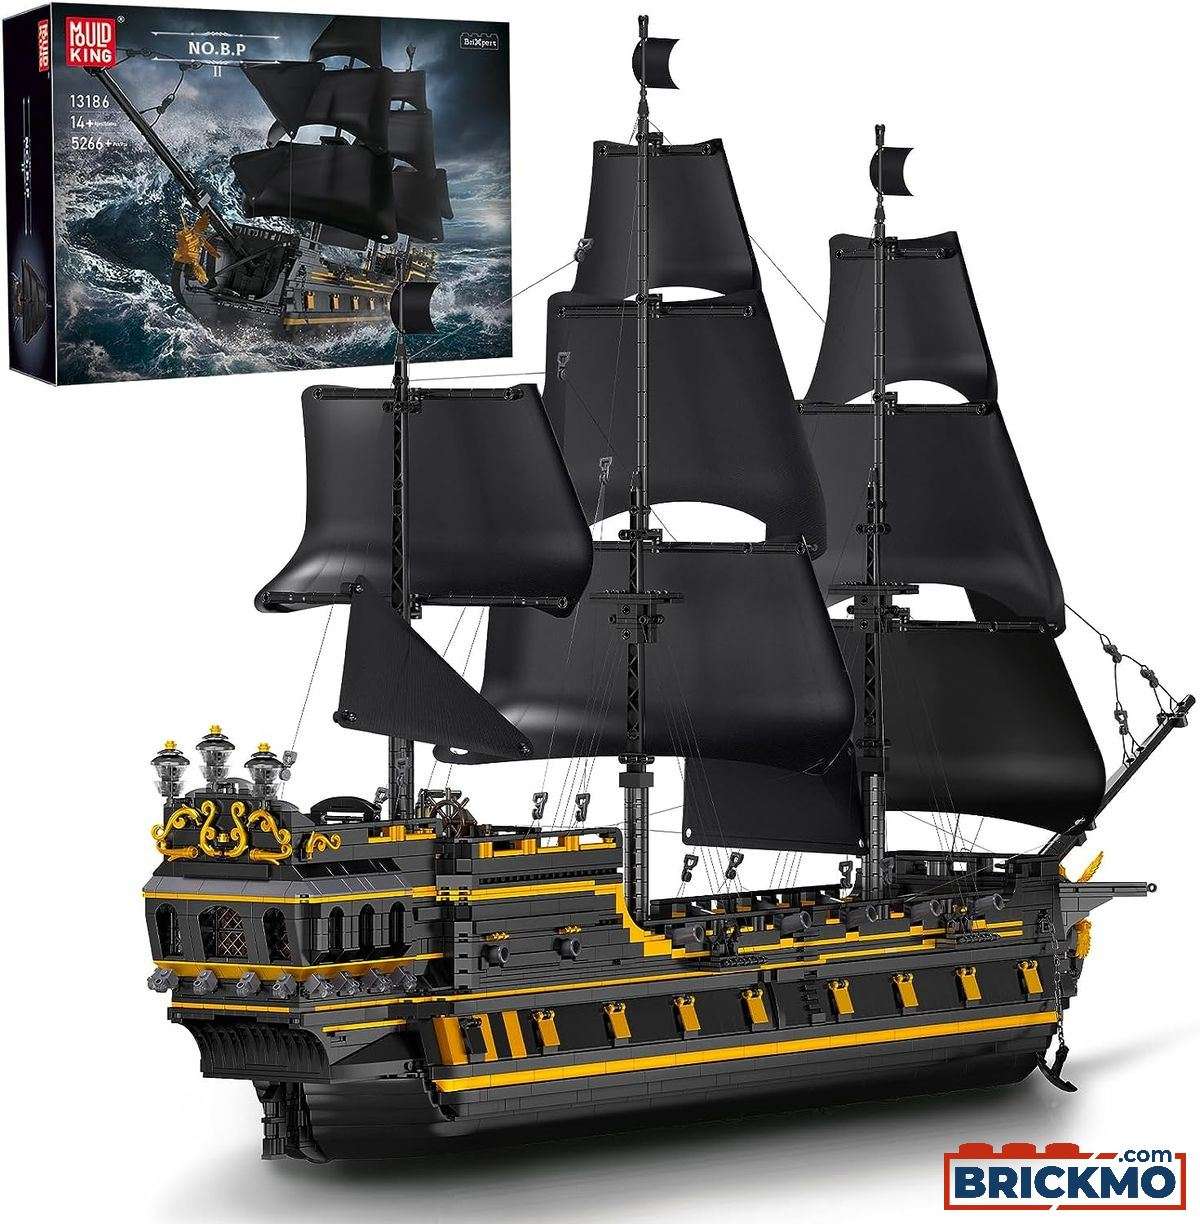 Mould King Black Pearl Pirate Ship 13186